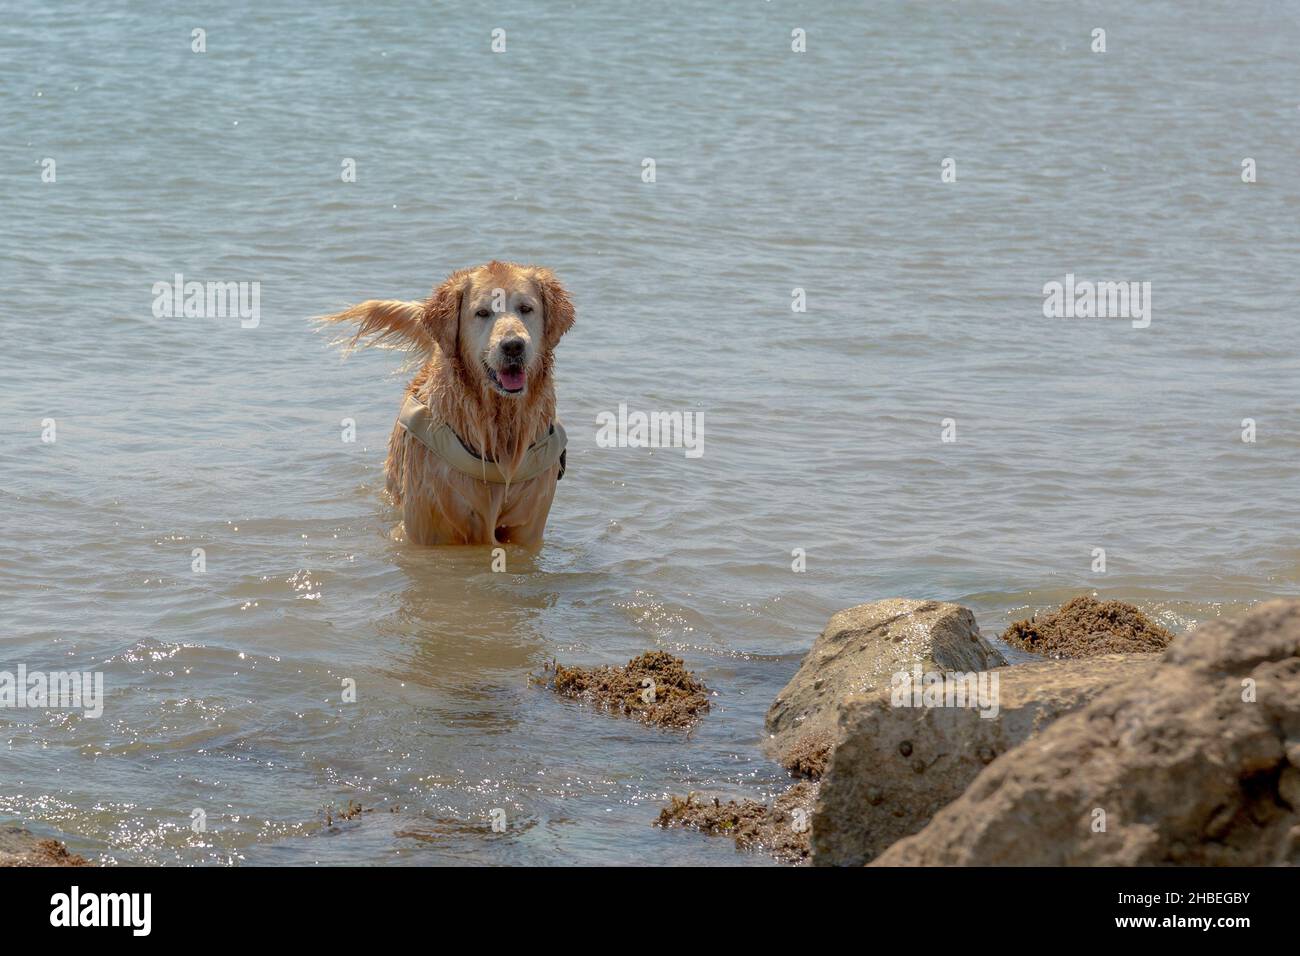 Dog at the sea having fun in the water near the rocks Stock Photo